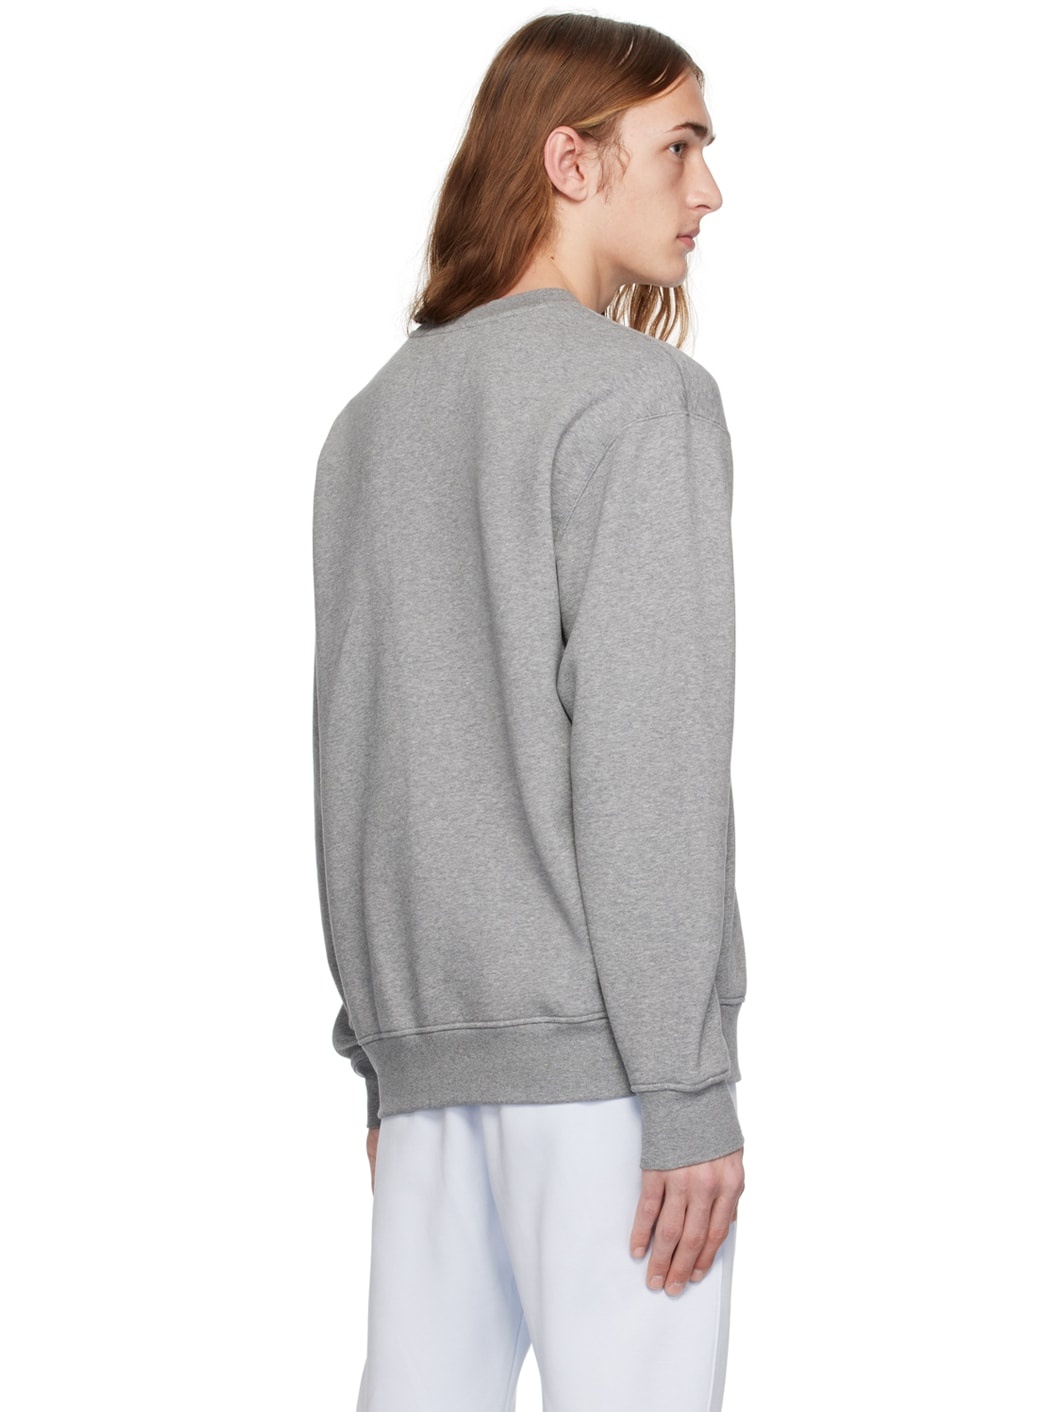 Gray Crewneck Sweatshirt - 3